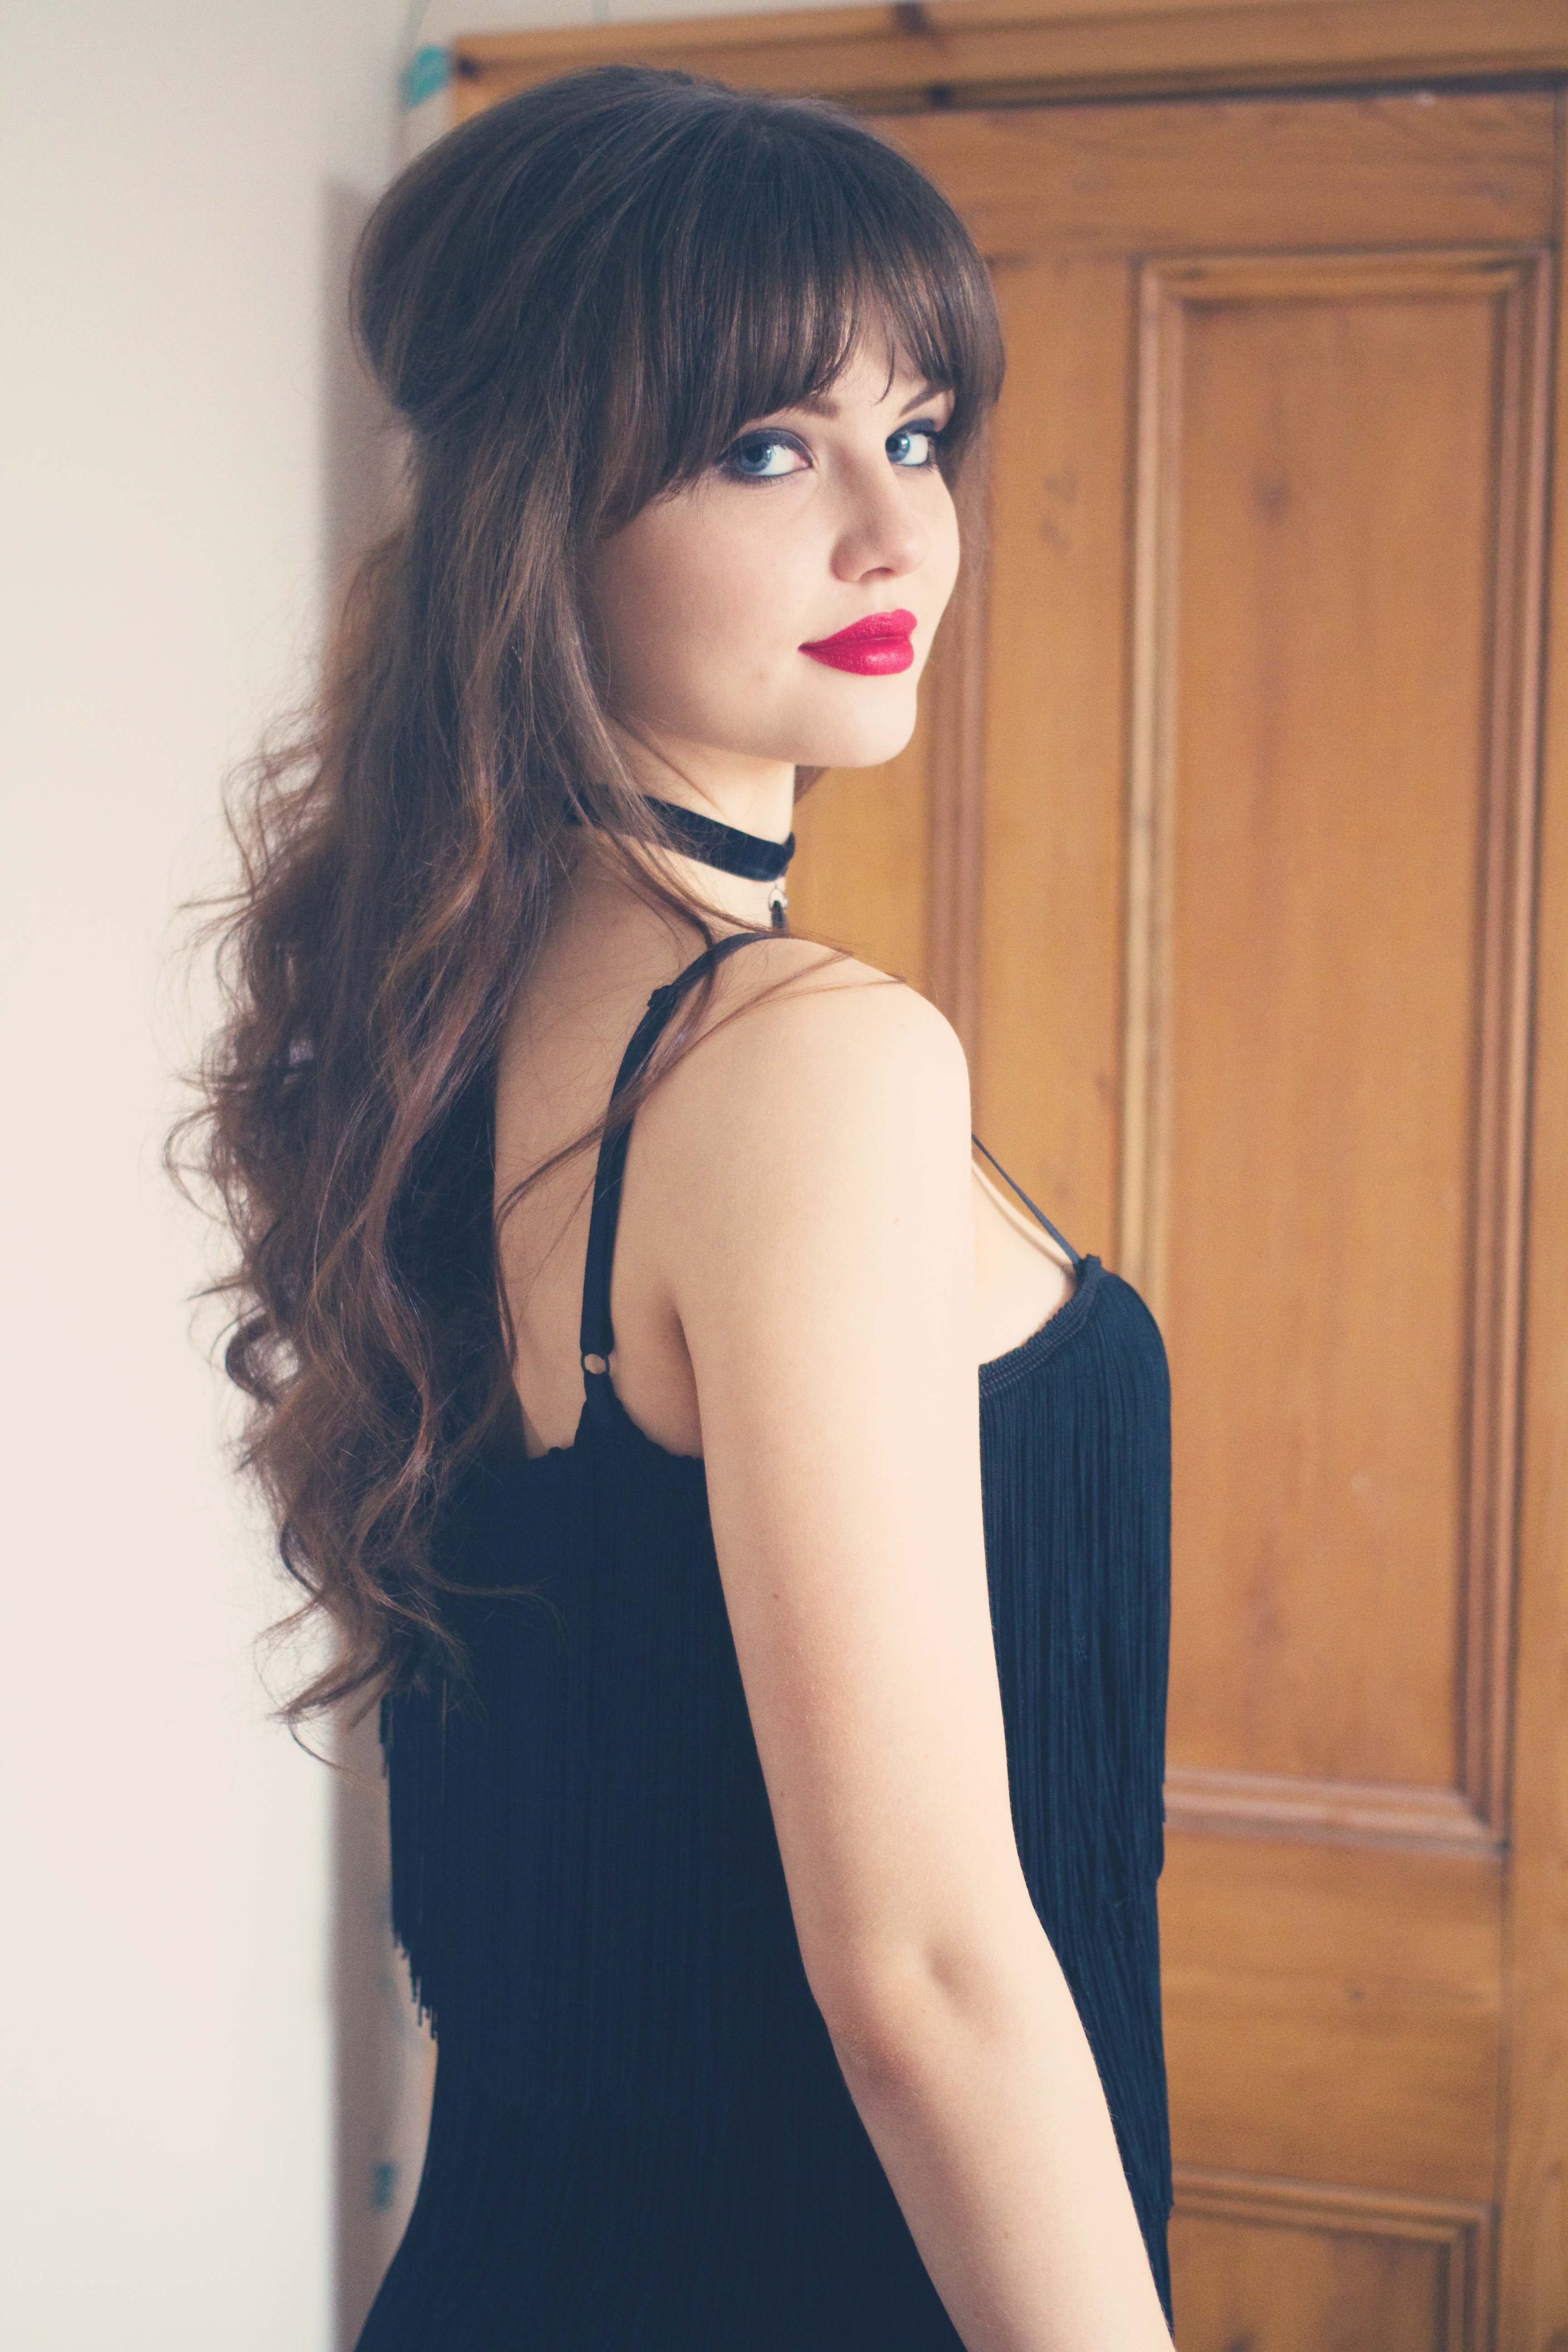 Fringed Gatsby style dress and black choker necklace